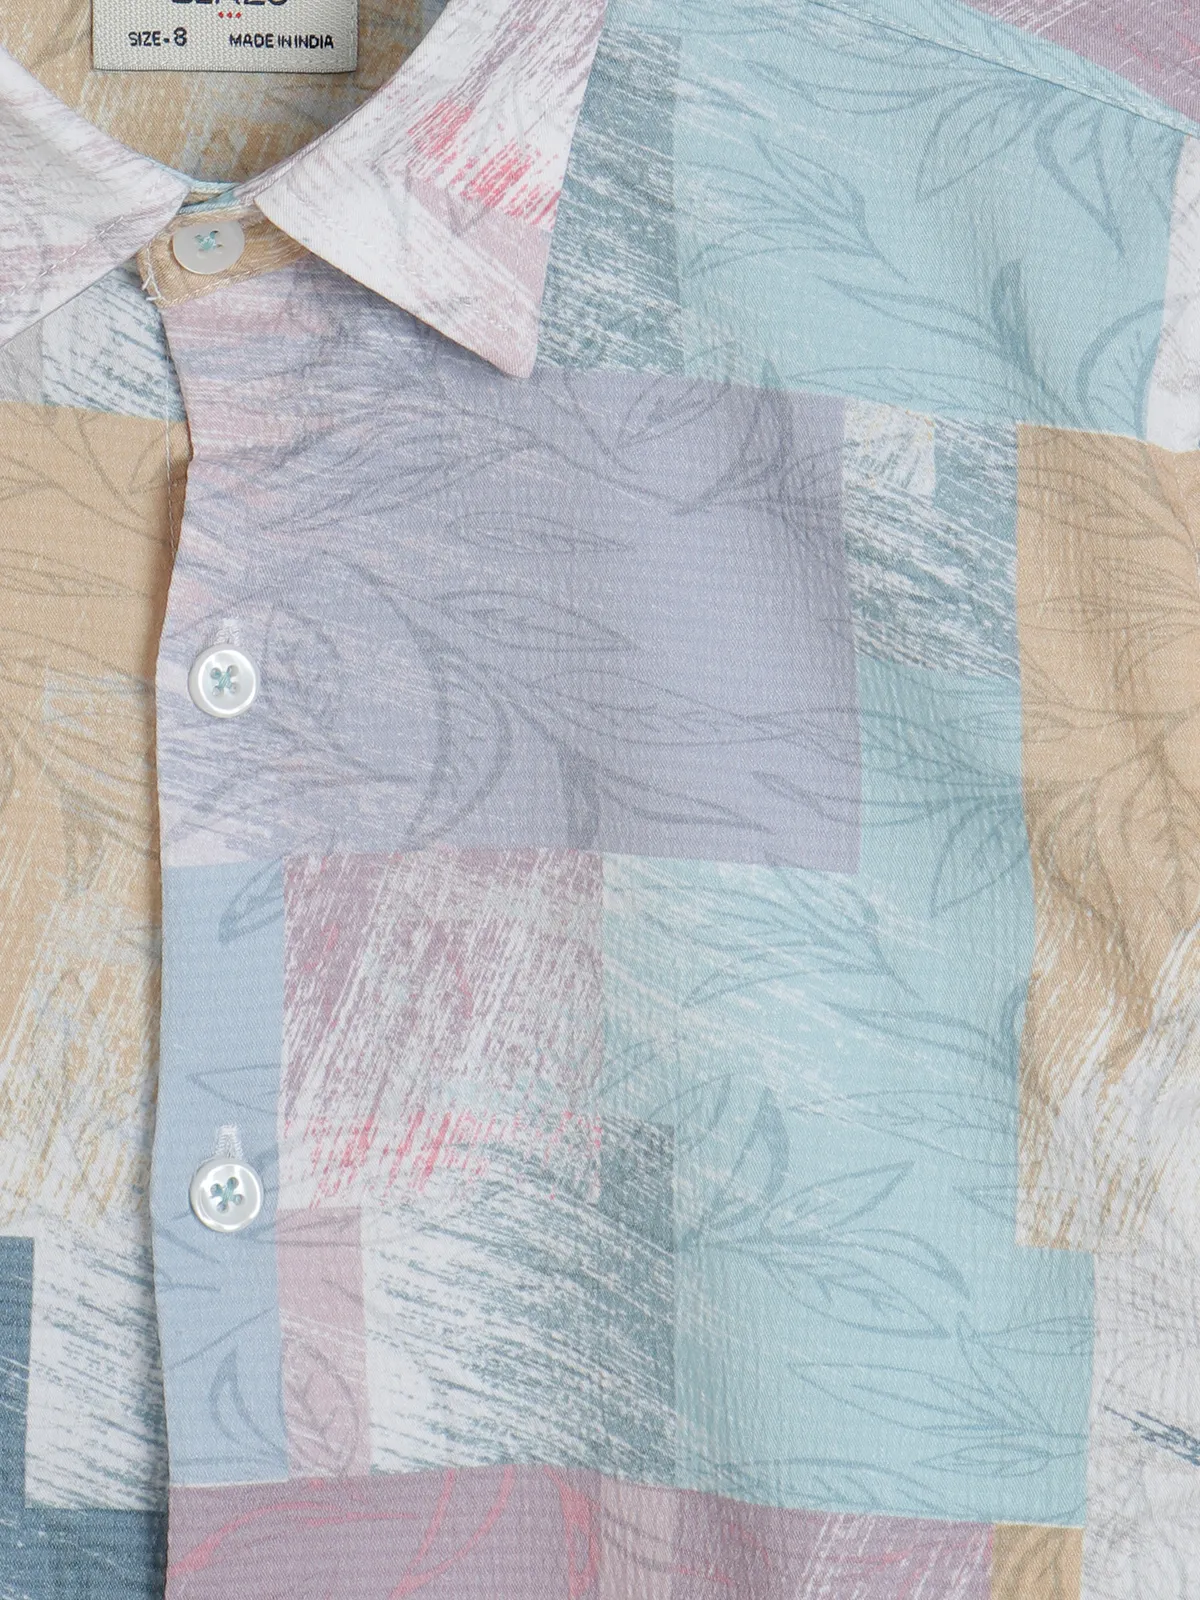 Blazo multi color printed cotton shirt